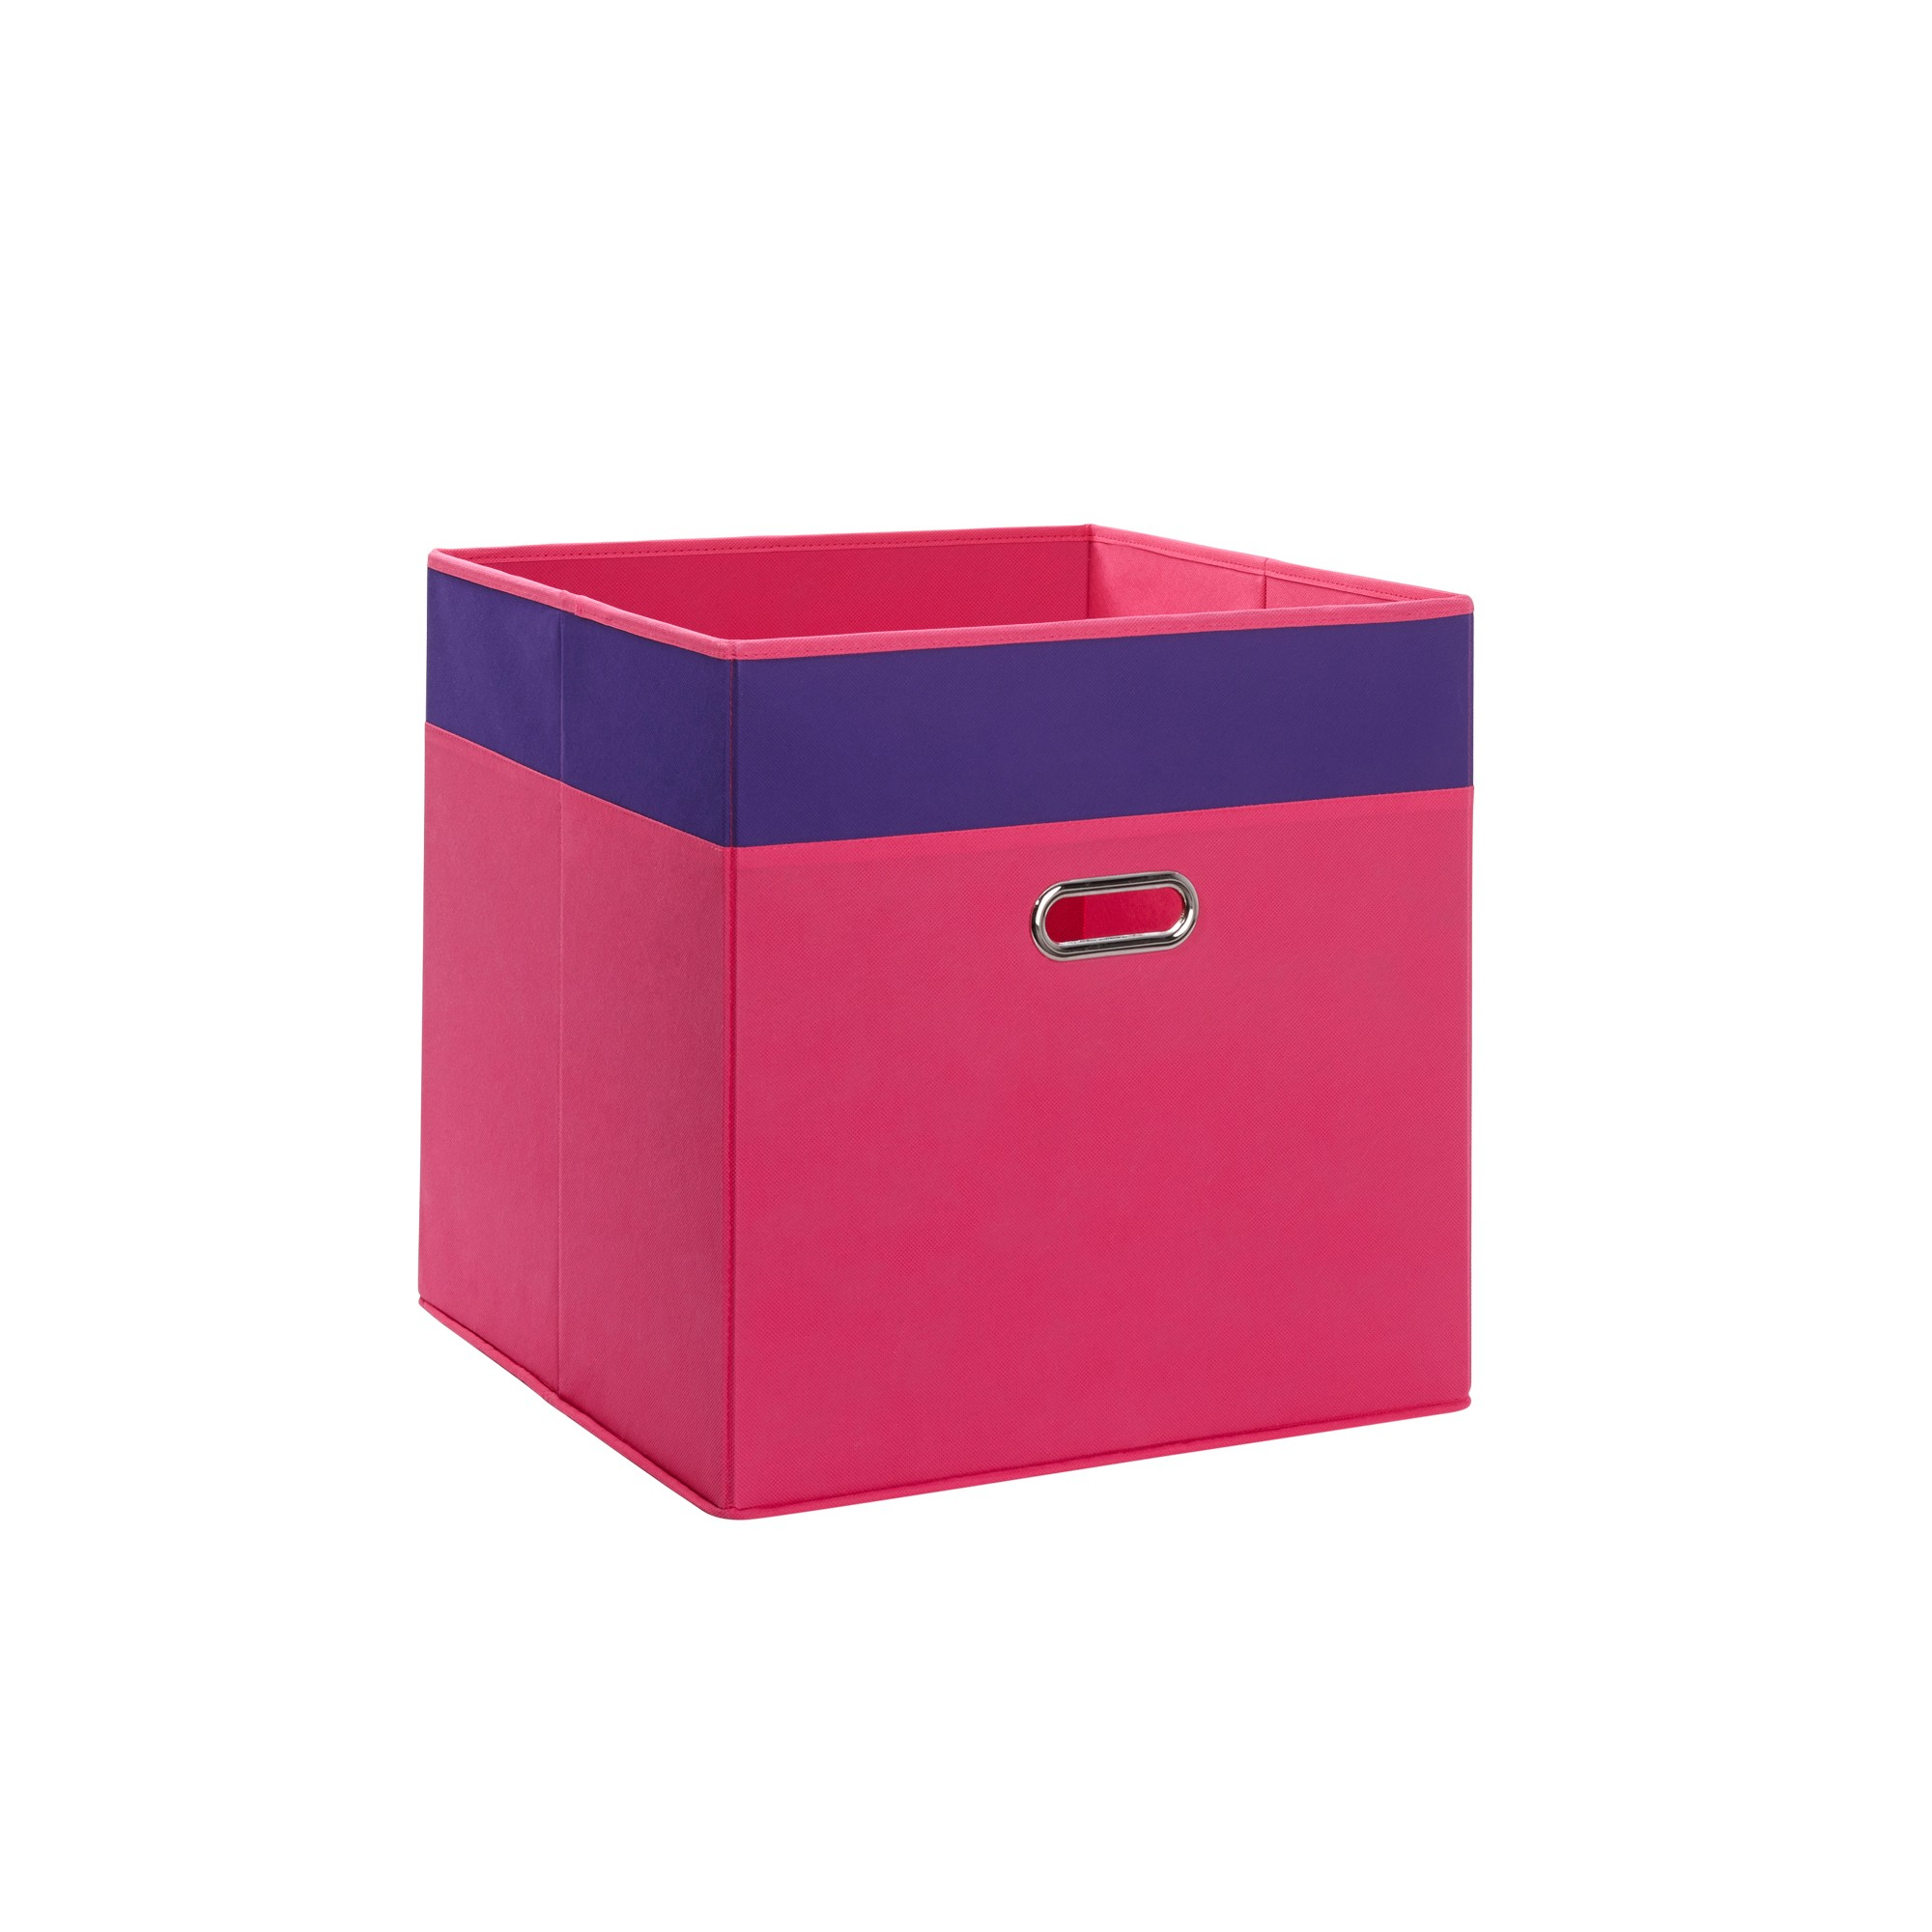 Riverridge Jumbo Folding Storage Bin Hot Pink With Dark Purple within measurements 2000 X 2000